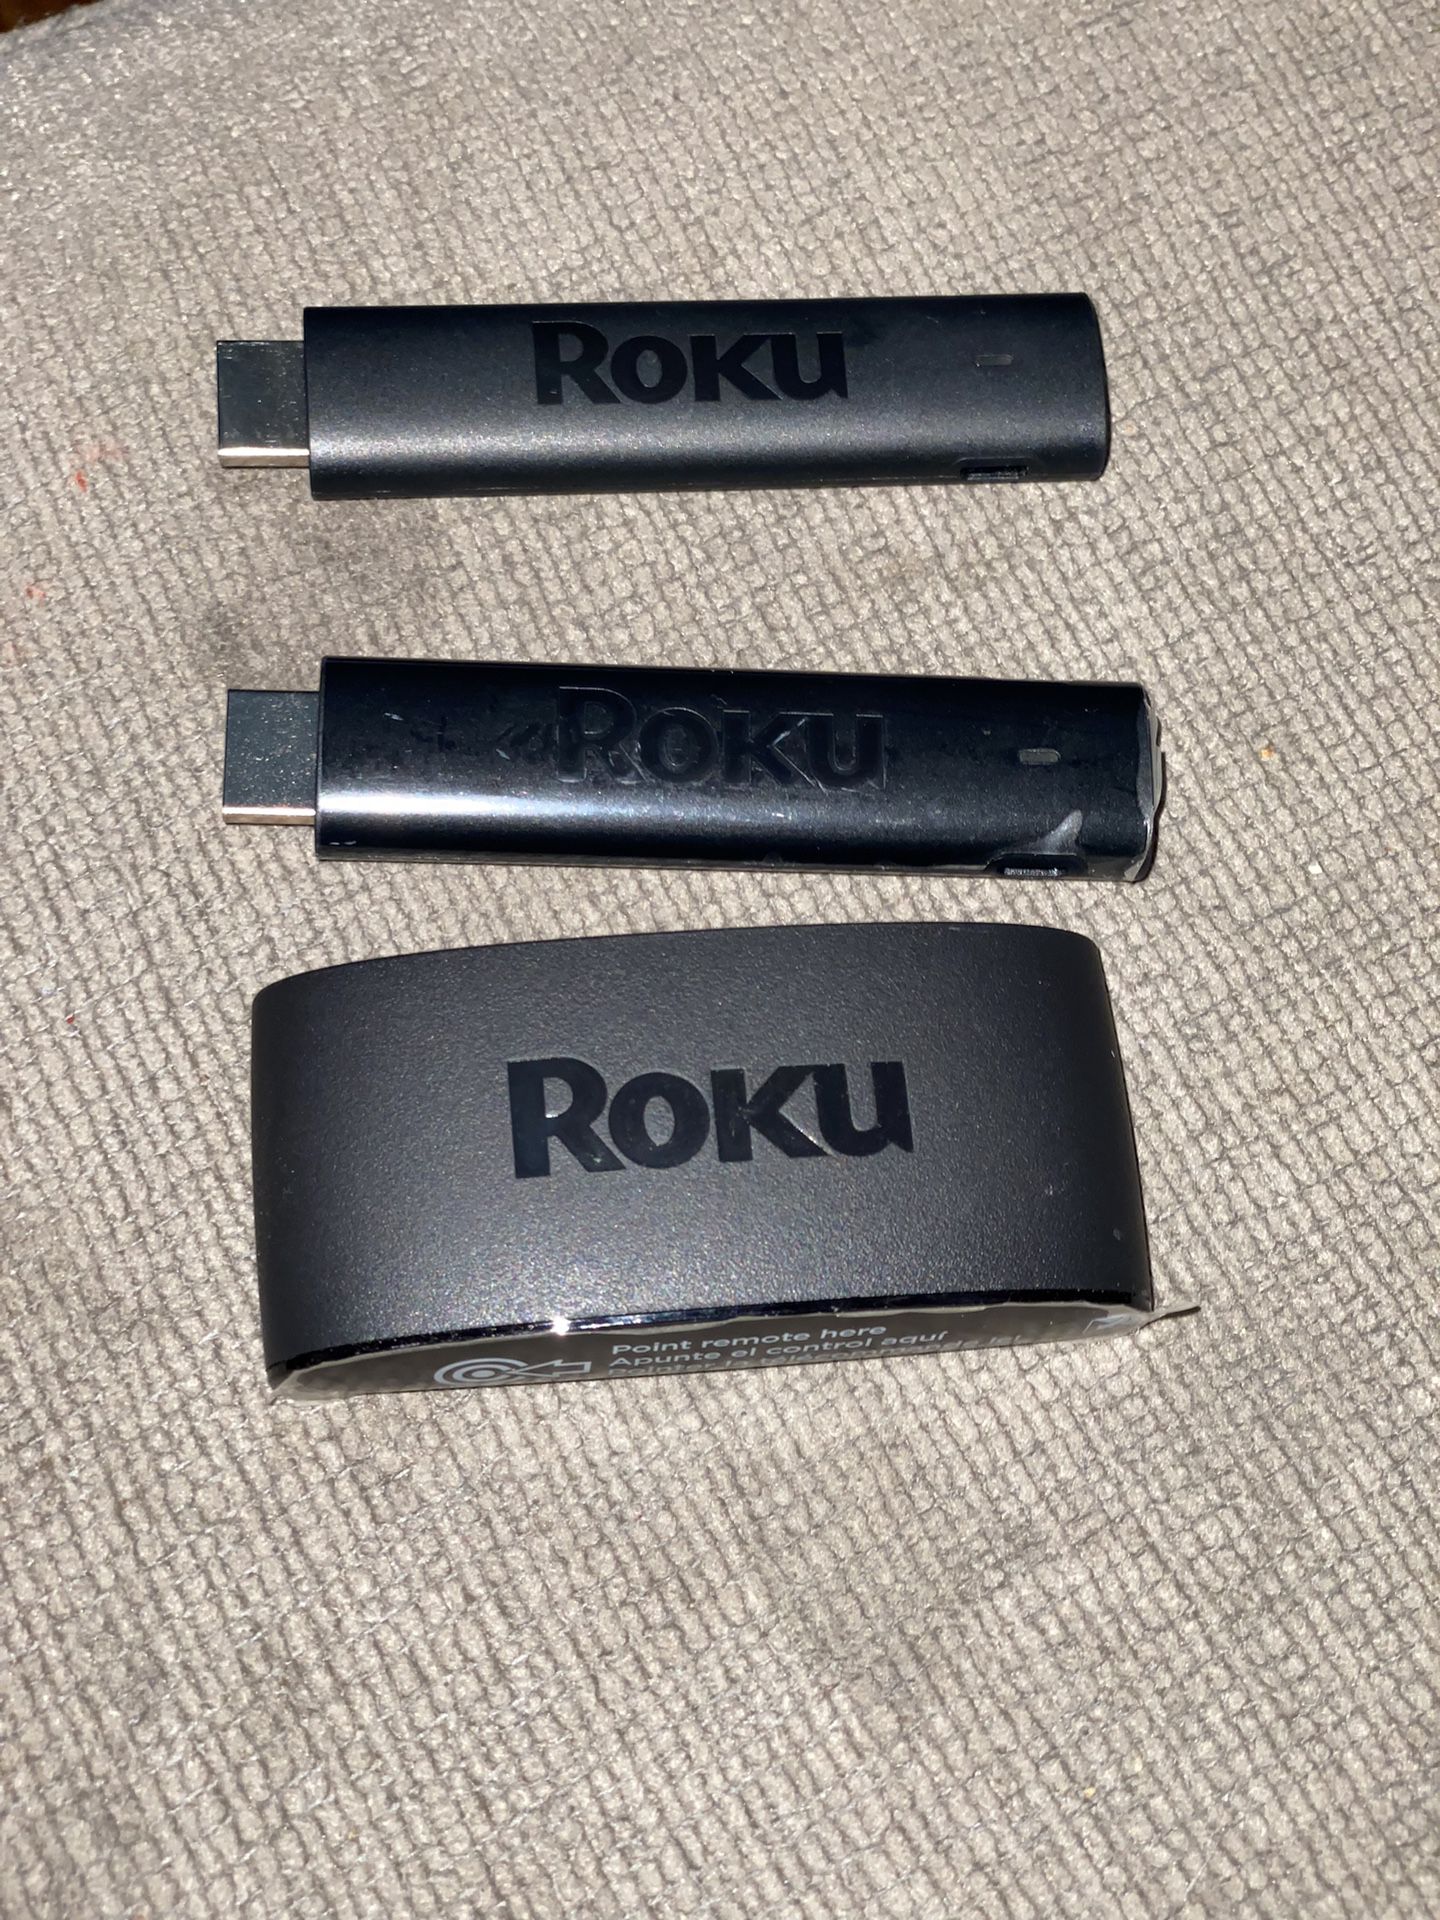 Roku Devices 